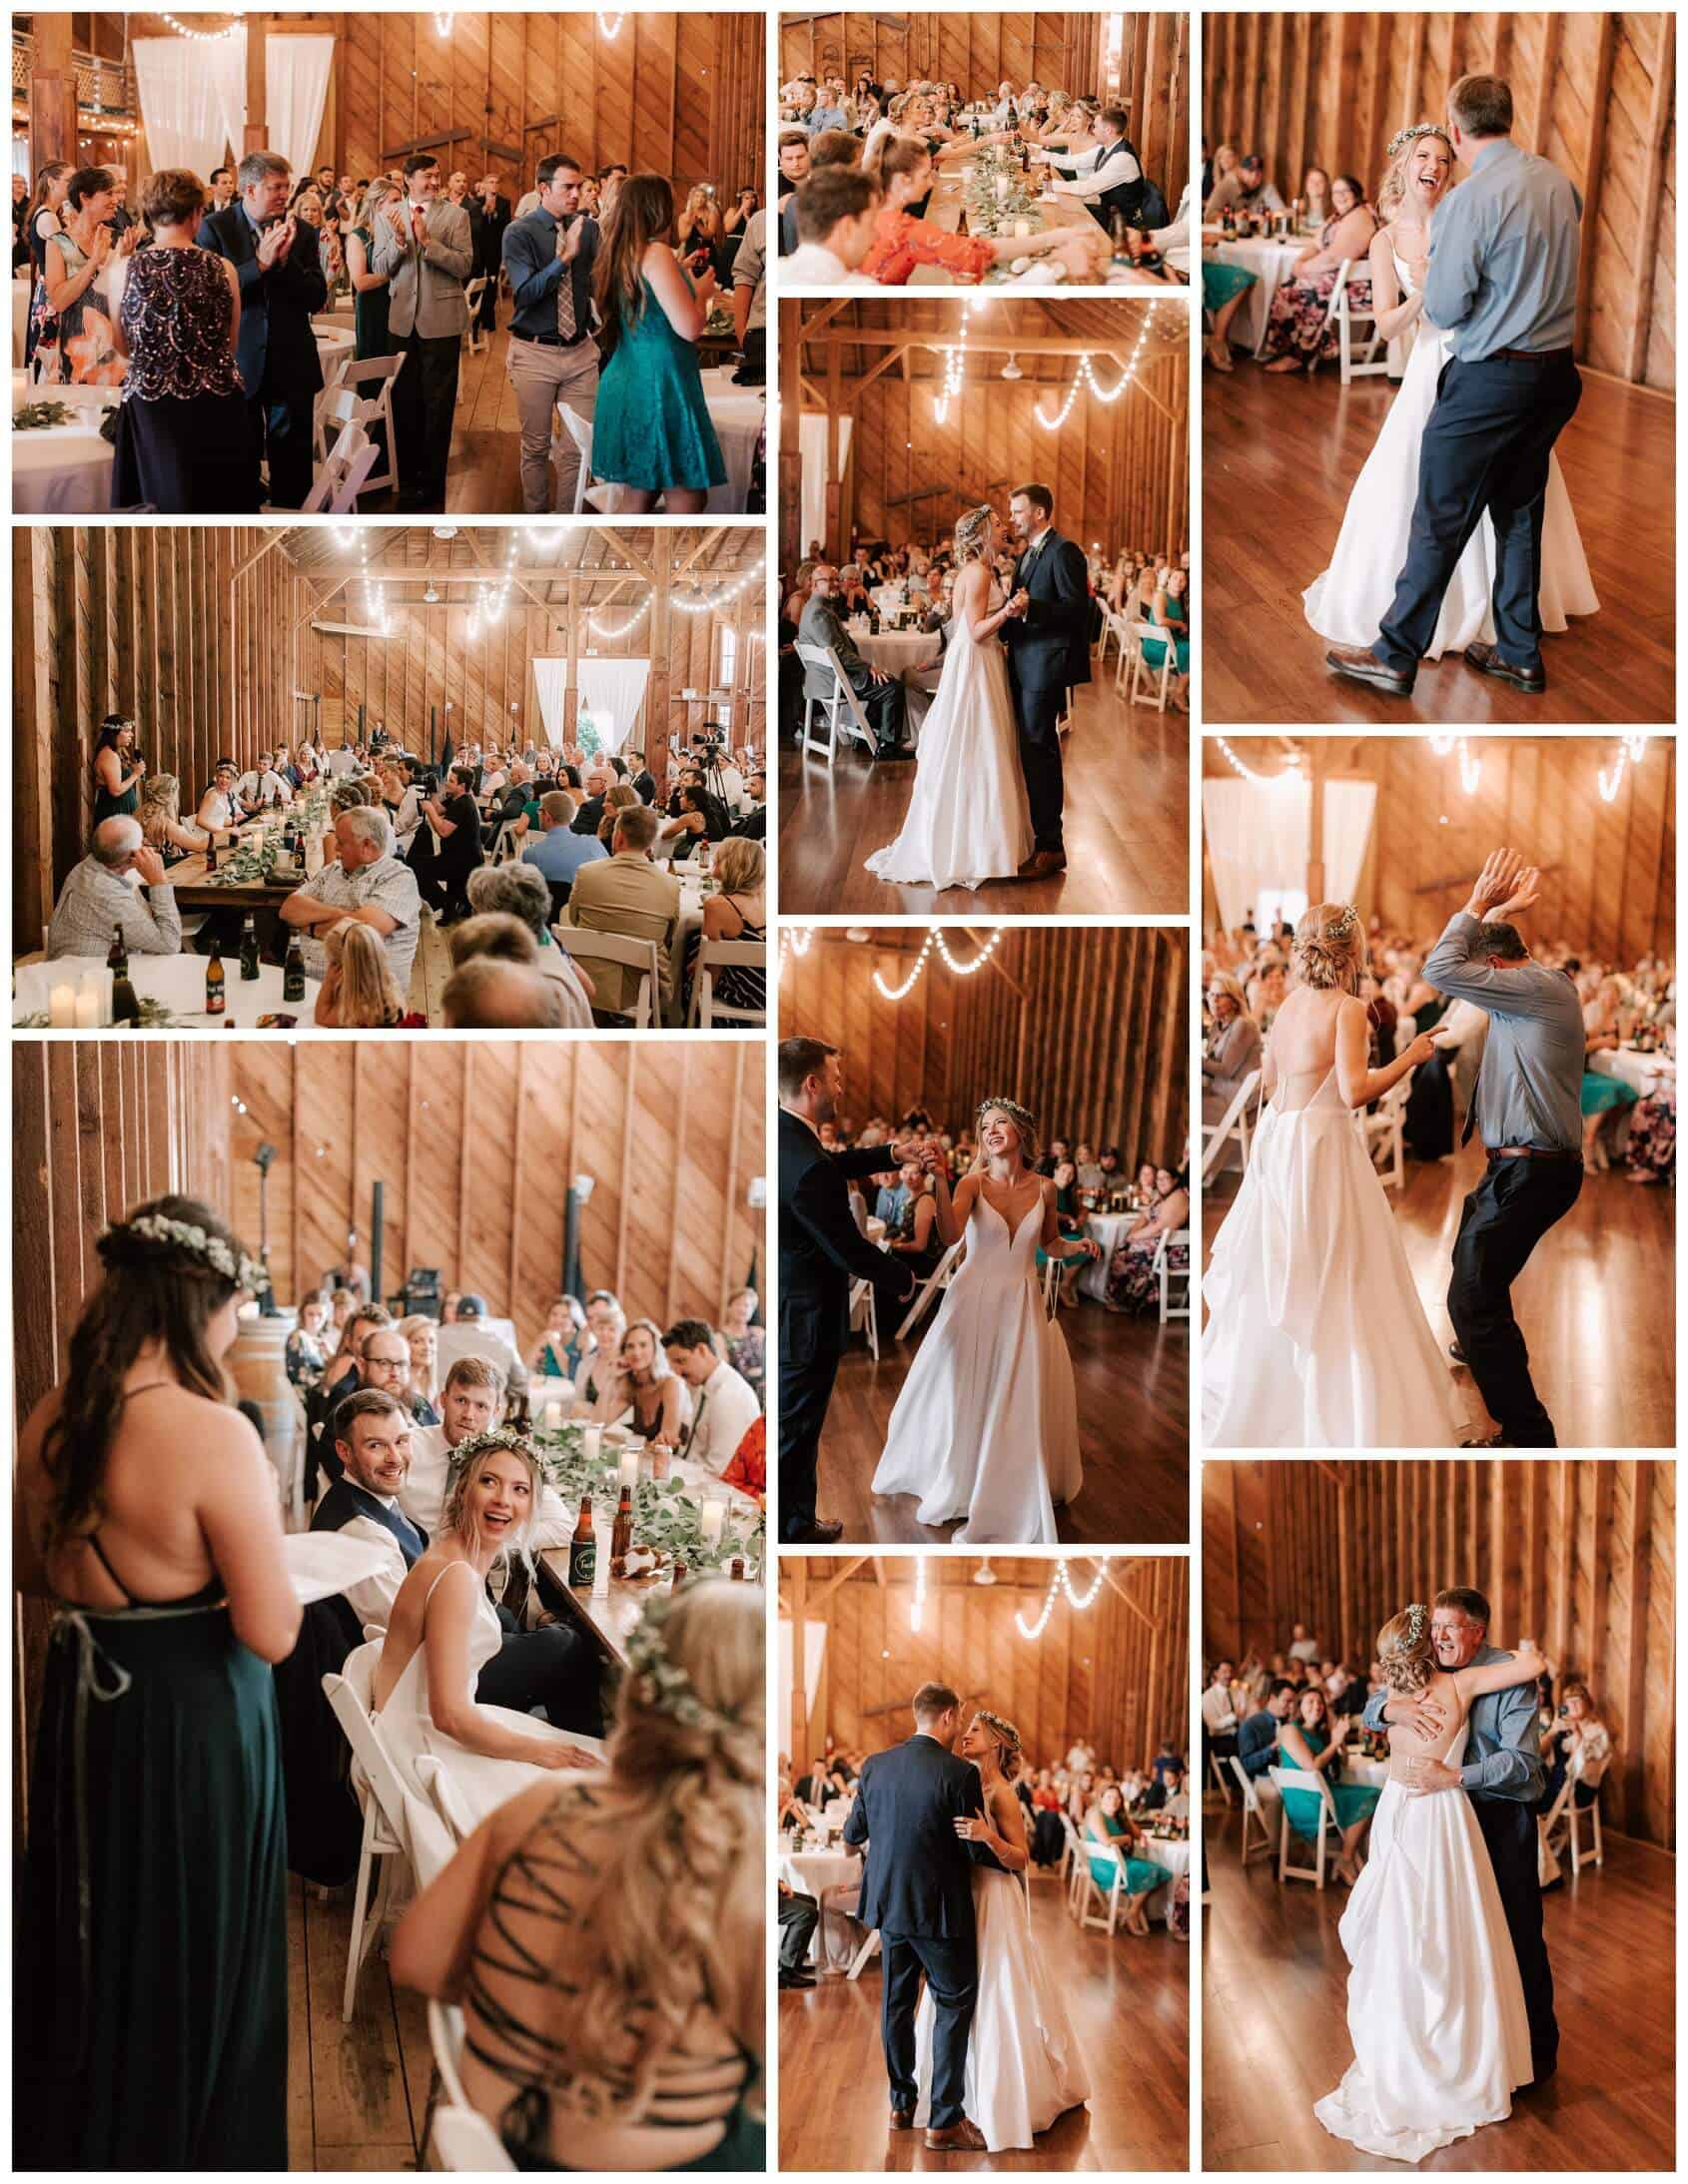 Crockett Farm wedding reception photos